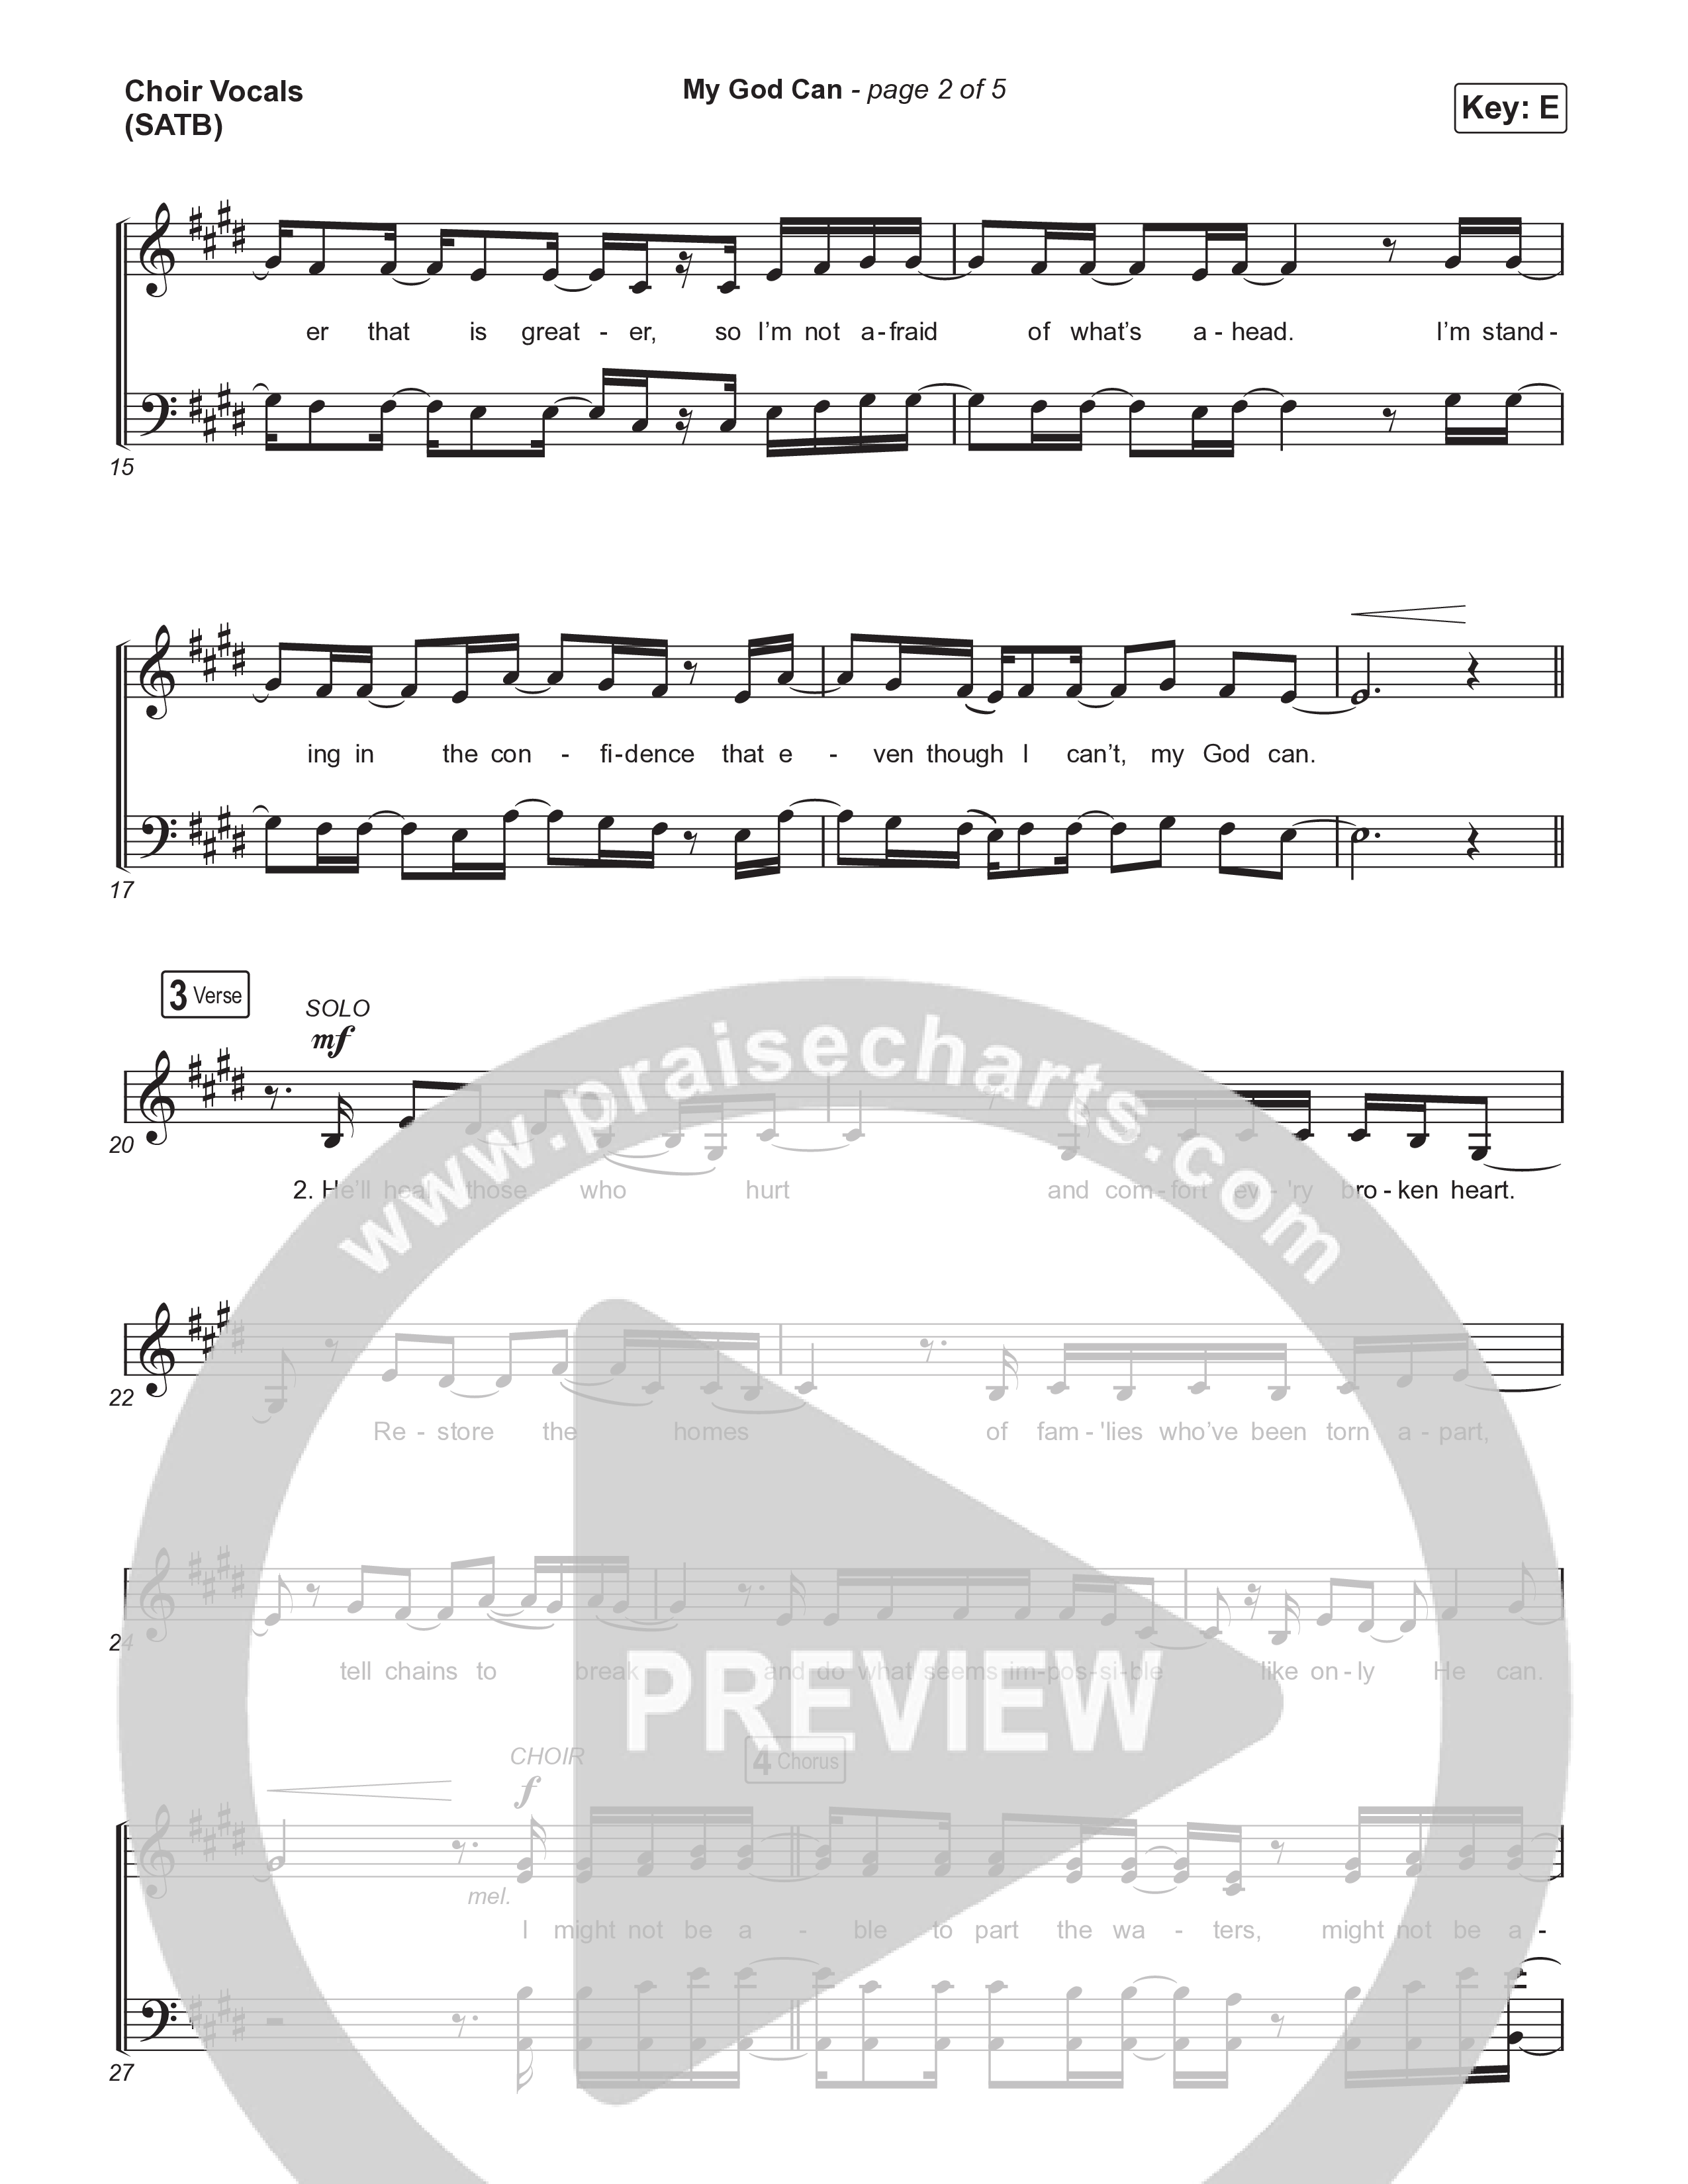 My God Can (Choral Anthem SATB) Choir Sheet (SATB) (Katy Nichole / Naomi Raine / Arr. Luke Gambill)